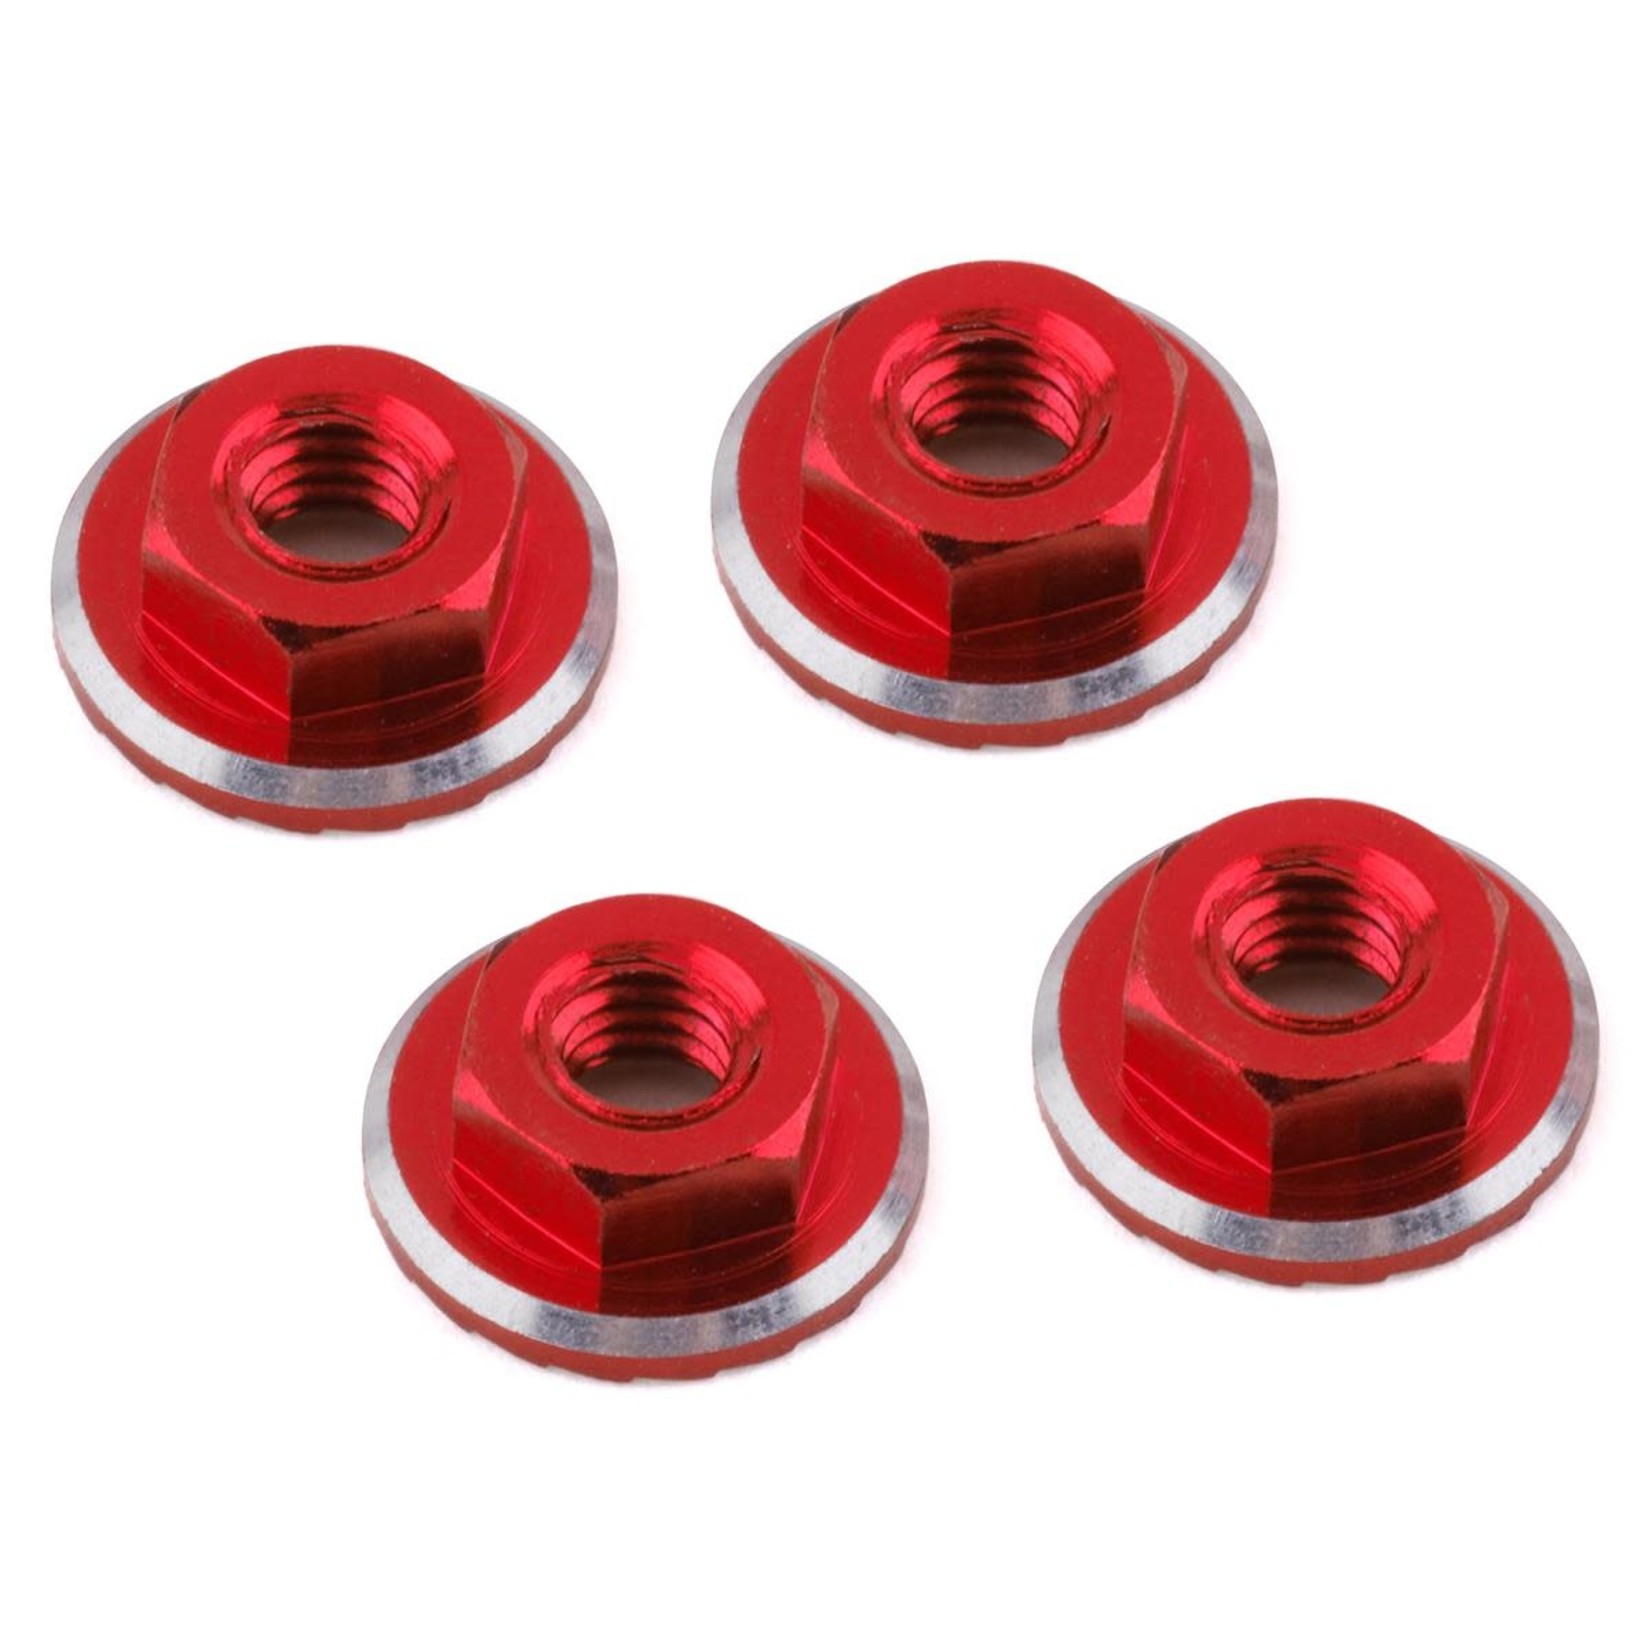 1UP Racing 1UP Racing Lockdown UltraLite 4mm Serrated Wheel Nuts (Red) (4) #80531